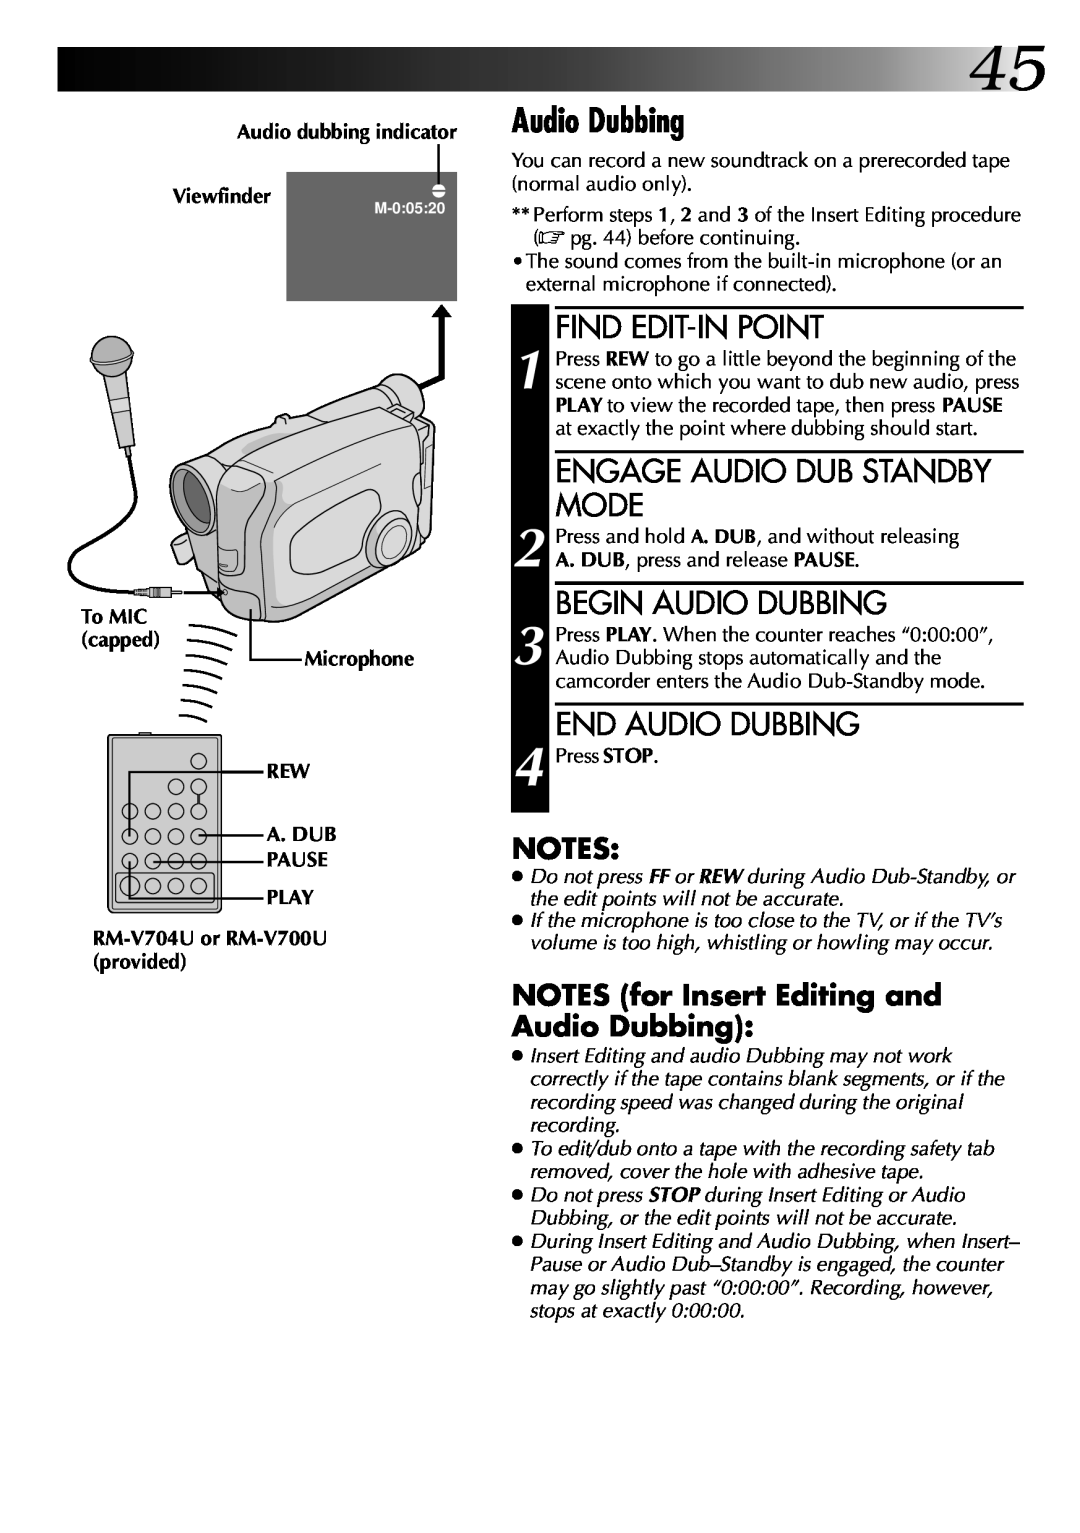 JVC 0597TOV*UN*VP Audio dubbing indicator, To MIC capped Microphone REW A. DUB PAUSE PLAY, RM-V704U or RM-V700U provided 